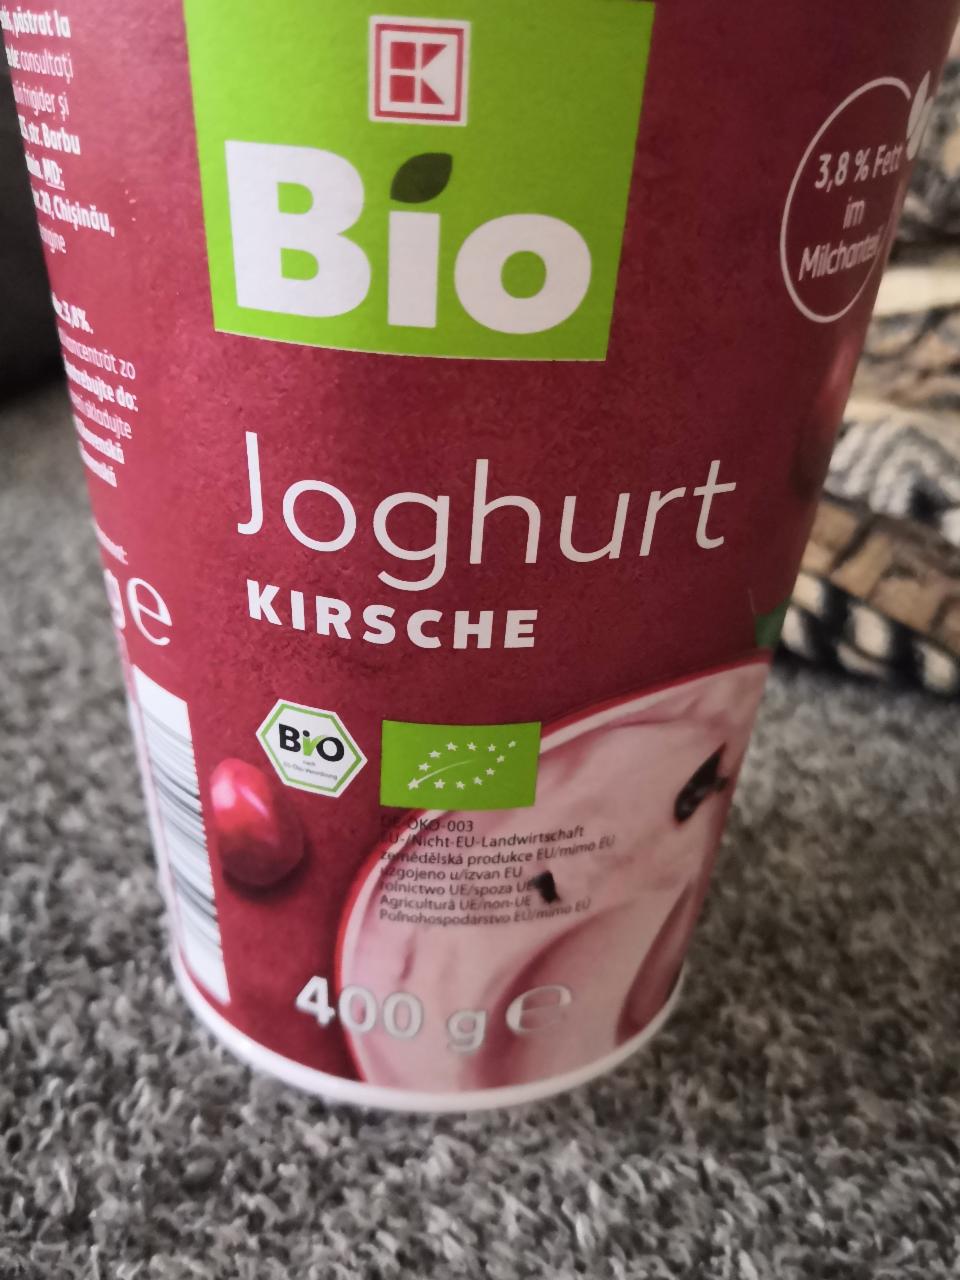 Zdjęcia - Joghurt Kirsche 3,8% Fett K-Bio